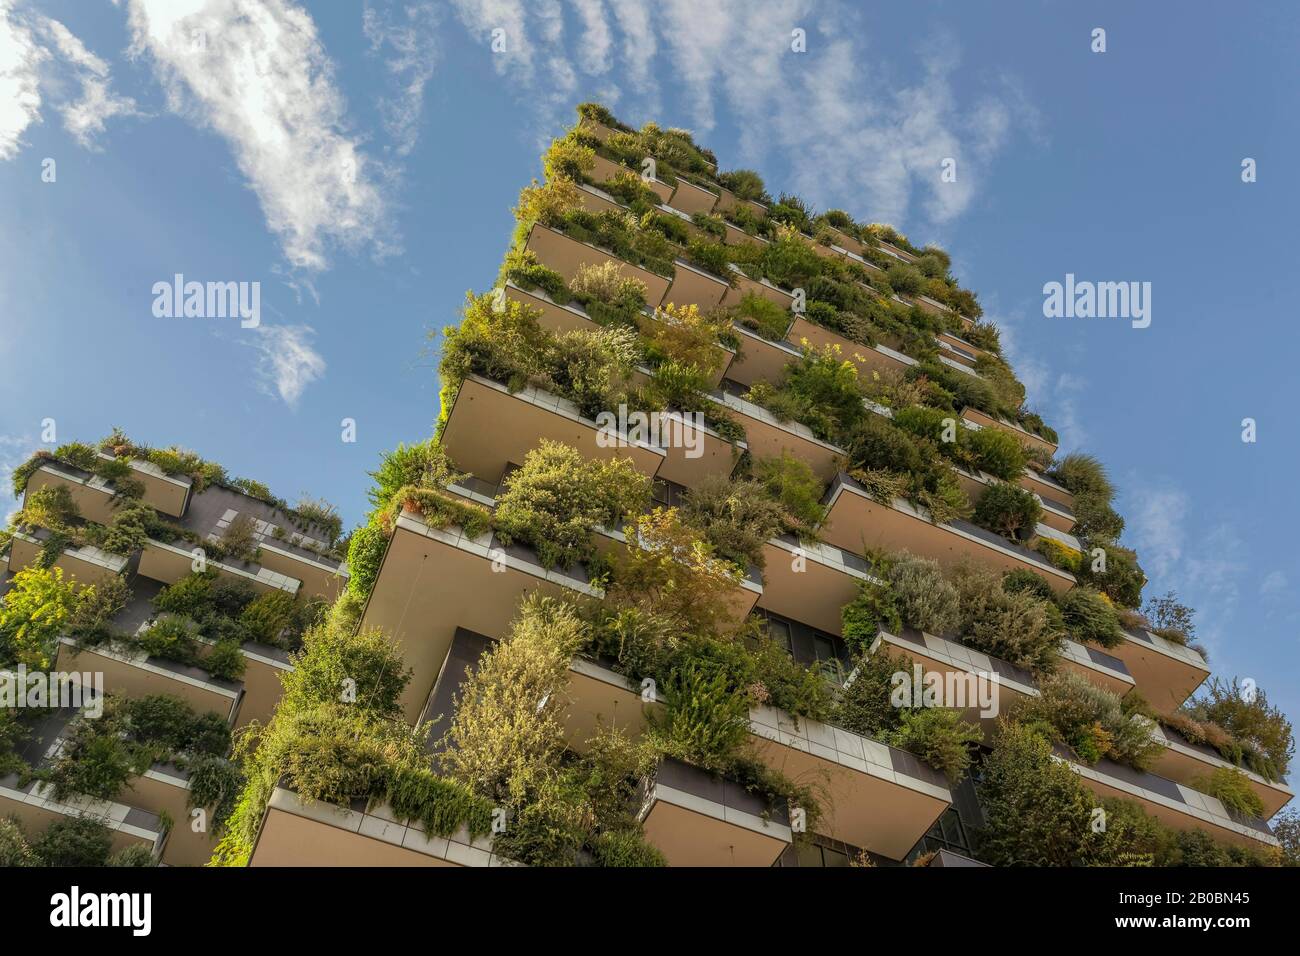 Wohntürme in Bosco Verticale oder Vertical Forest, Architekt Boeri, Stadtteil Porta Nuova, Mailand, Lombardei, Italien Stockfoto